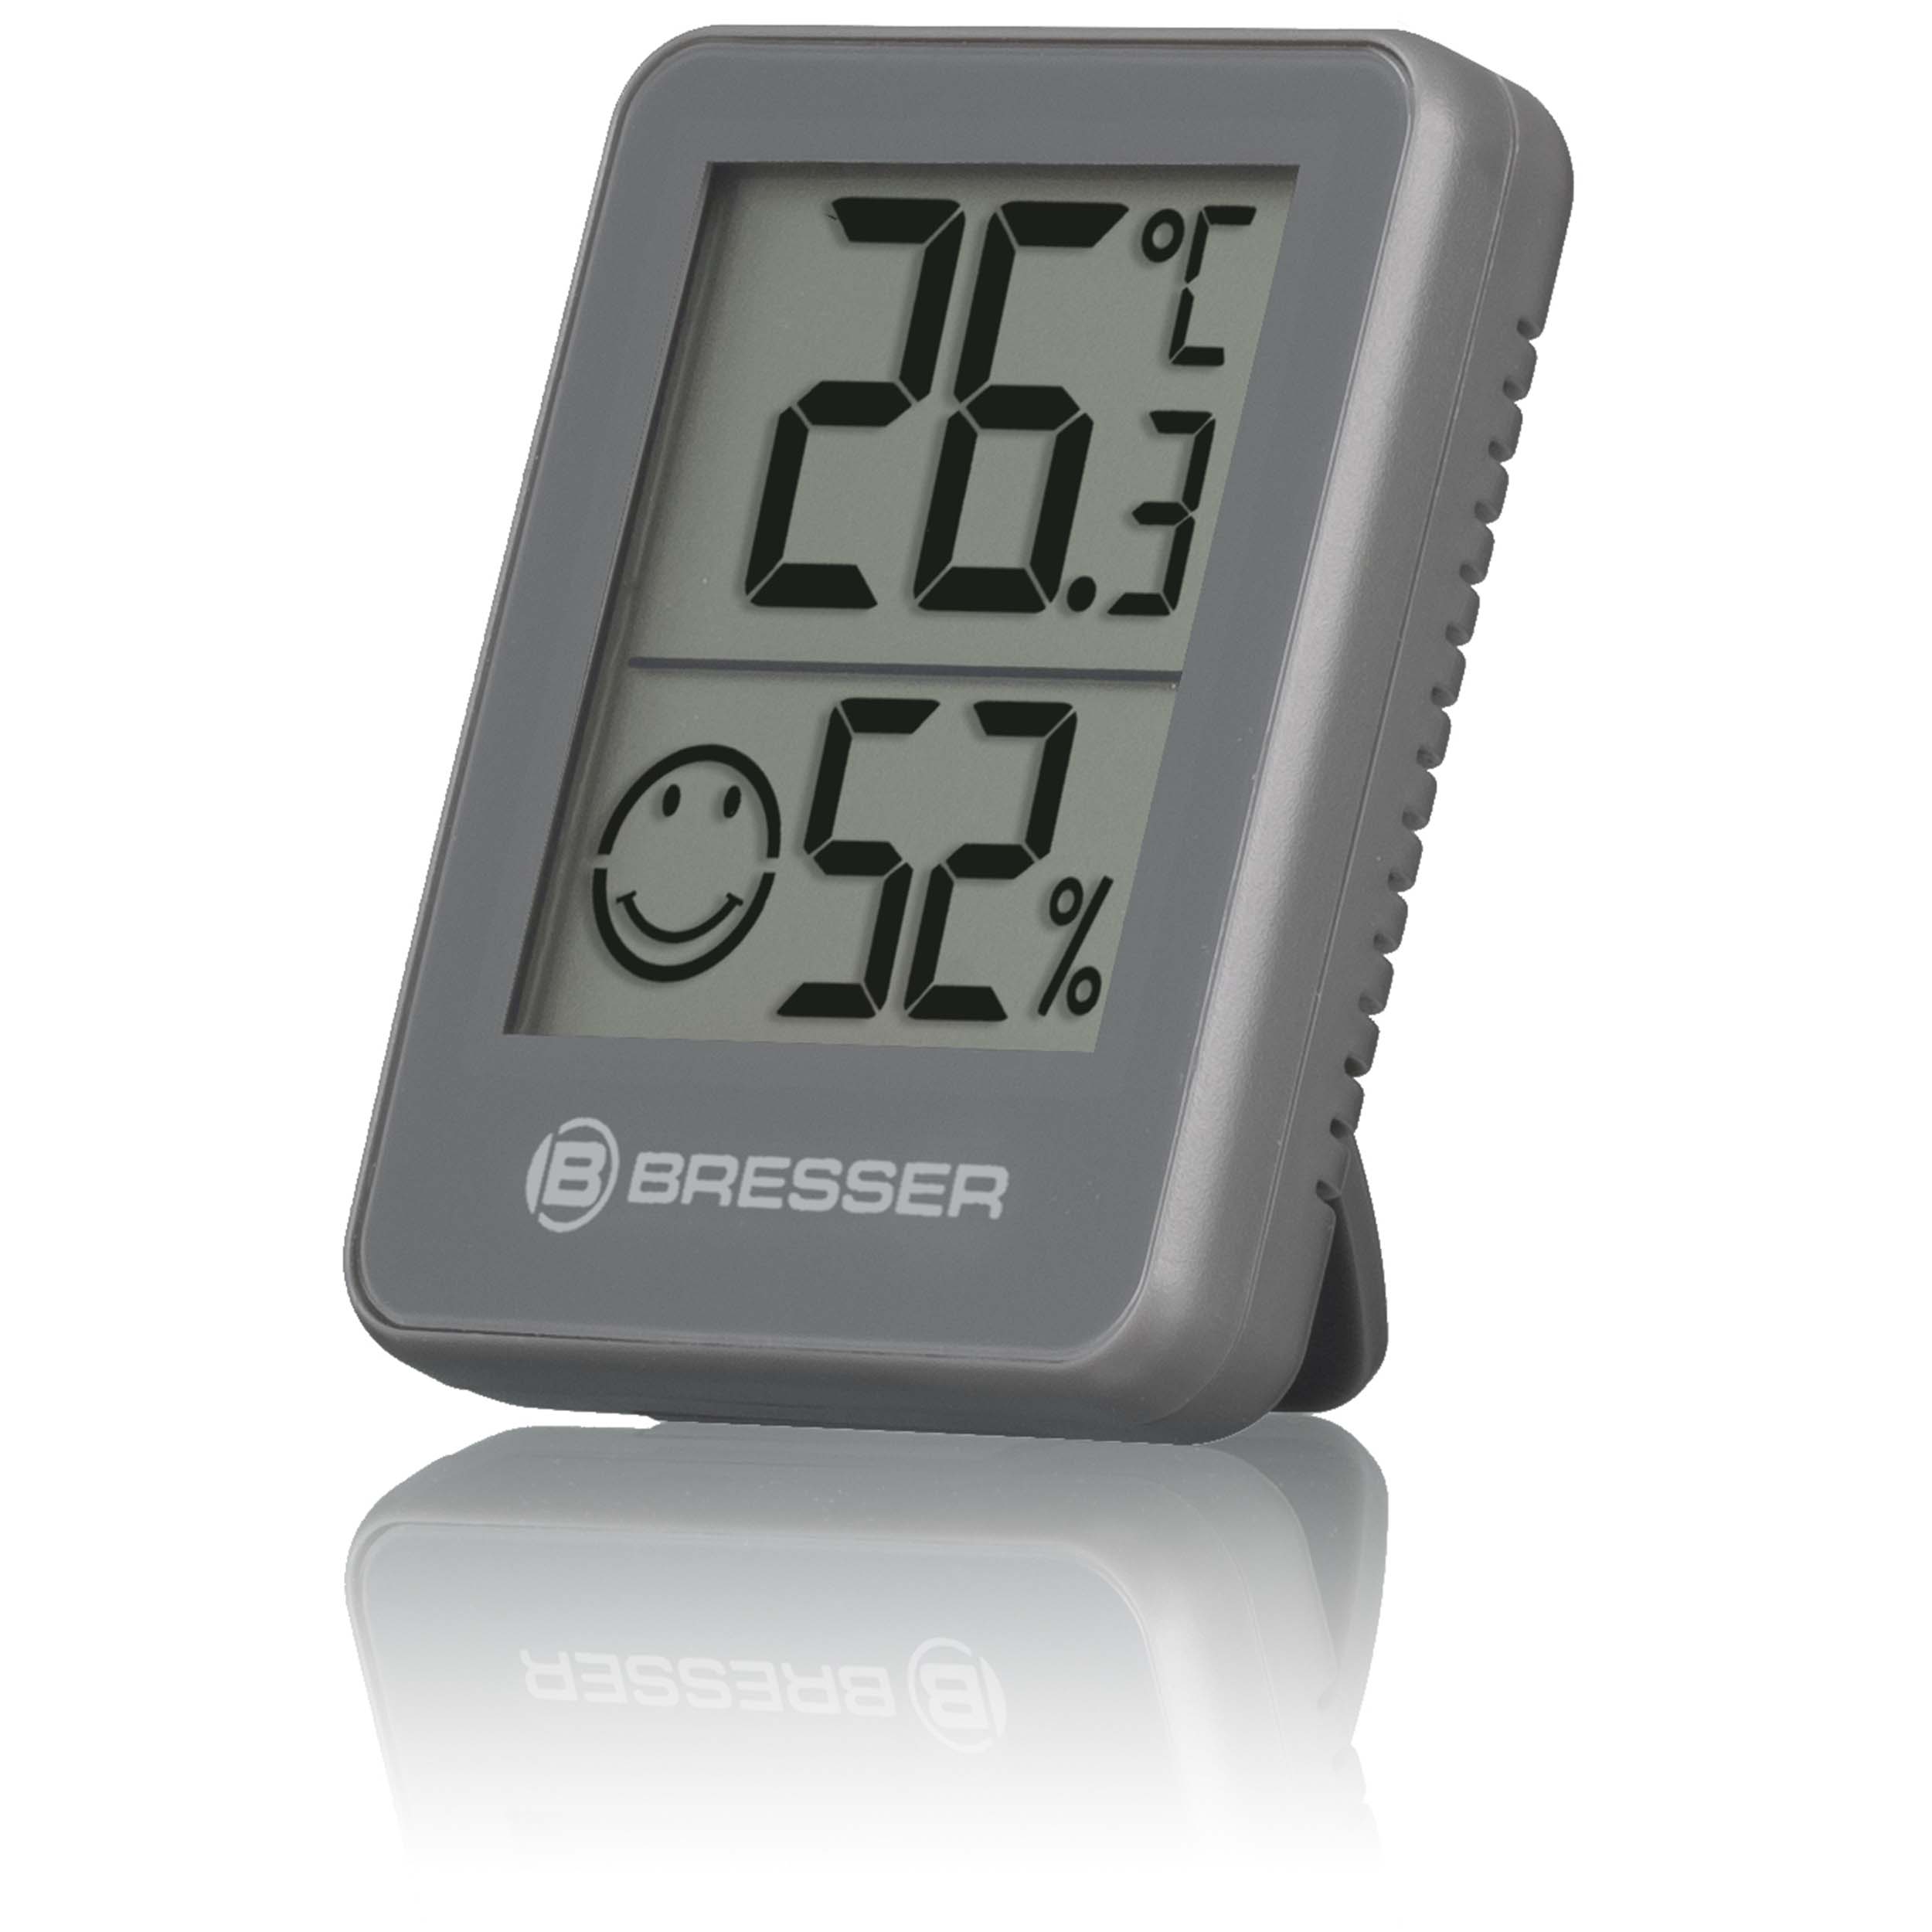 BRESSER ClimaTemp Thermo-Hygrometer Indicator 3 unit set